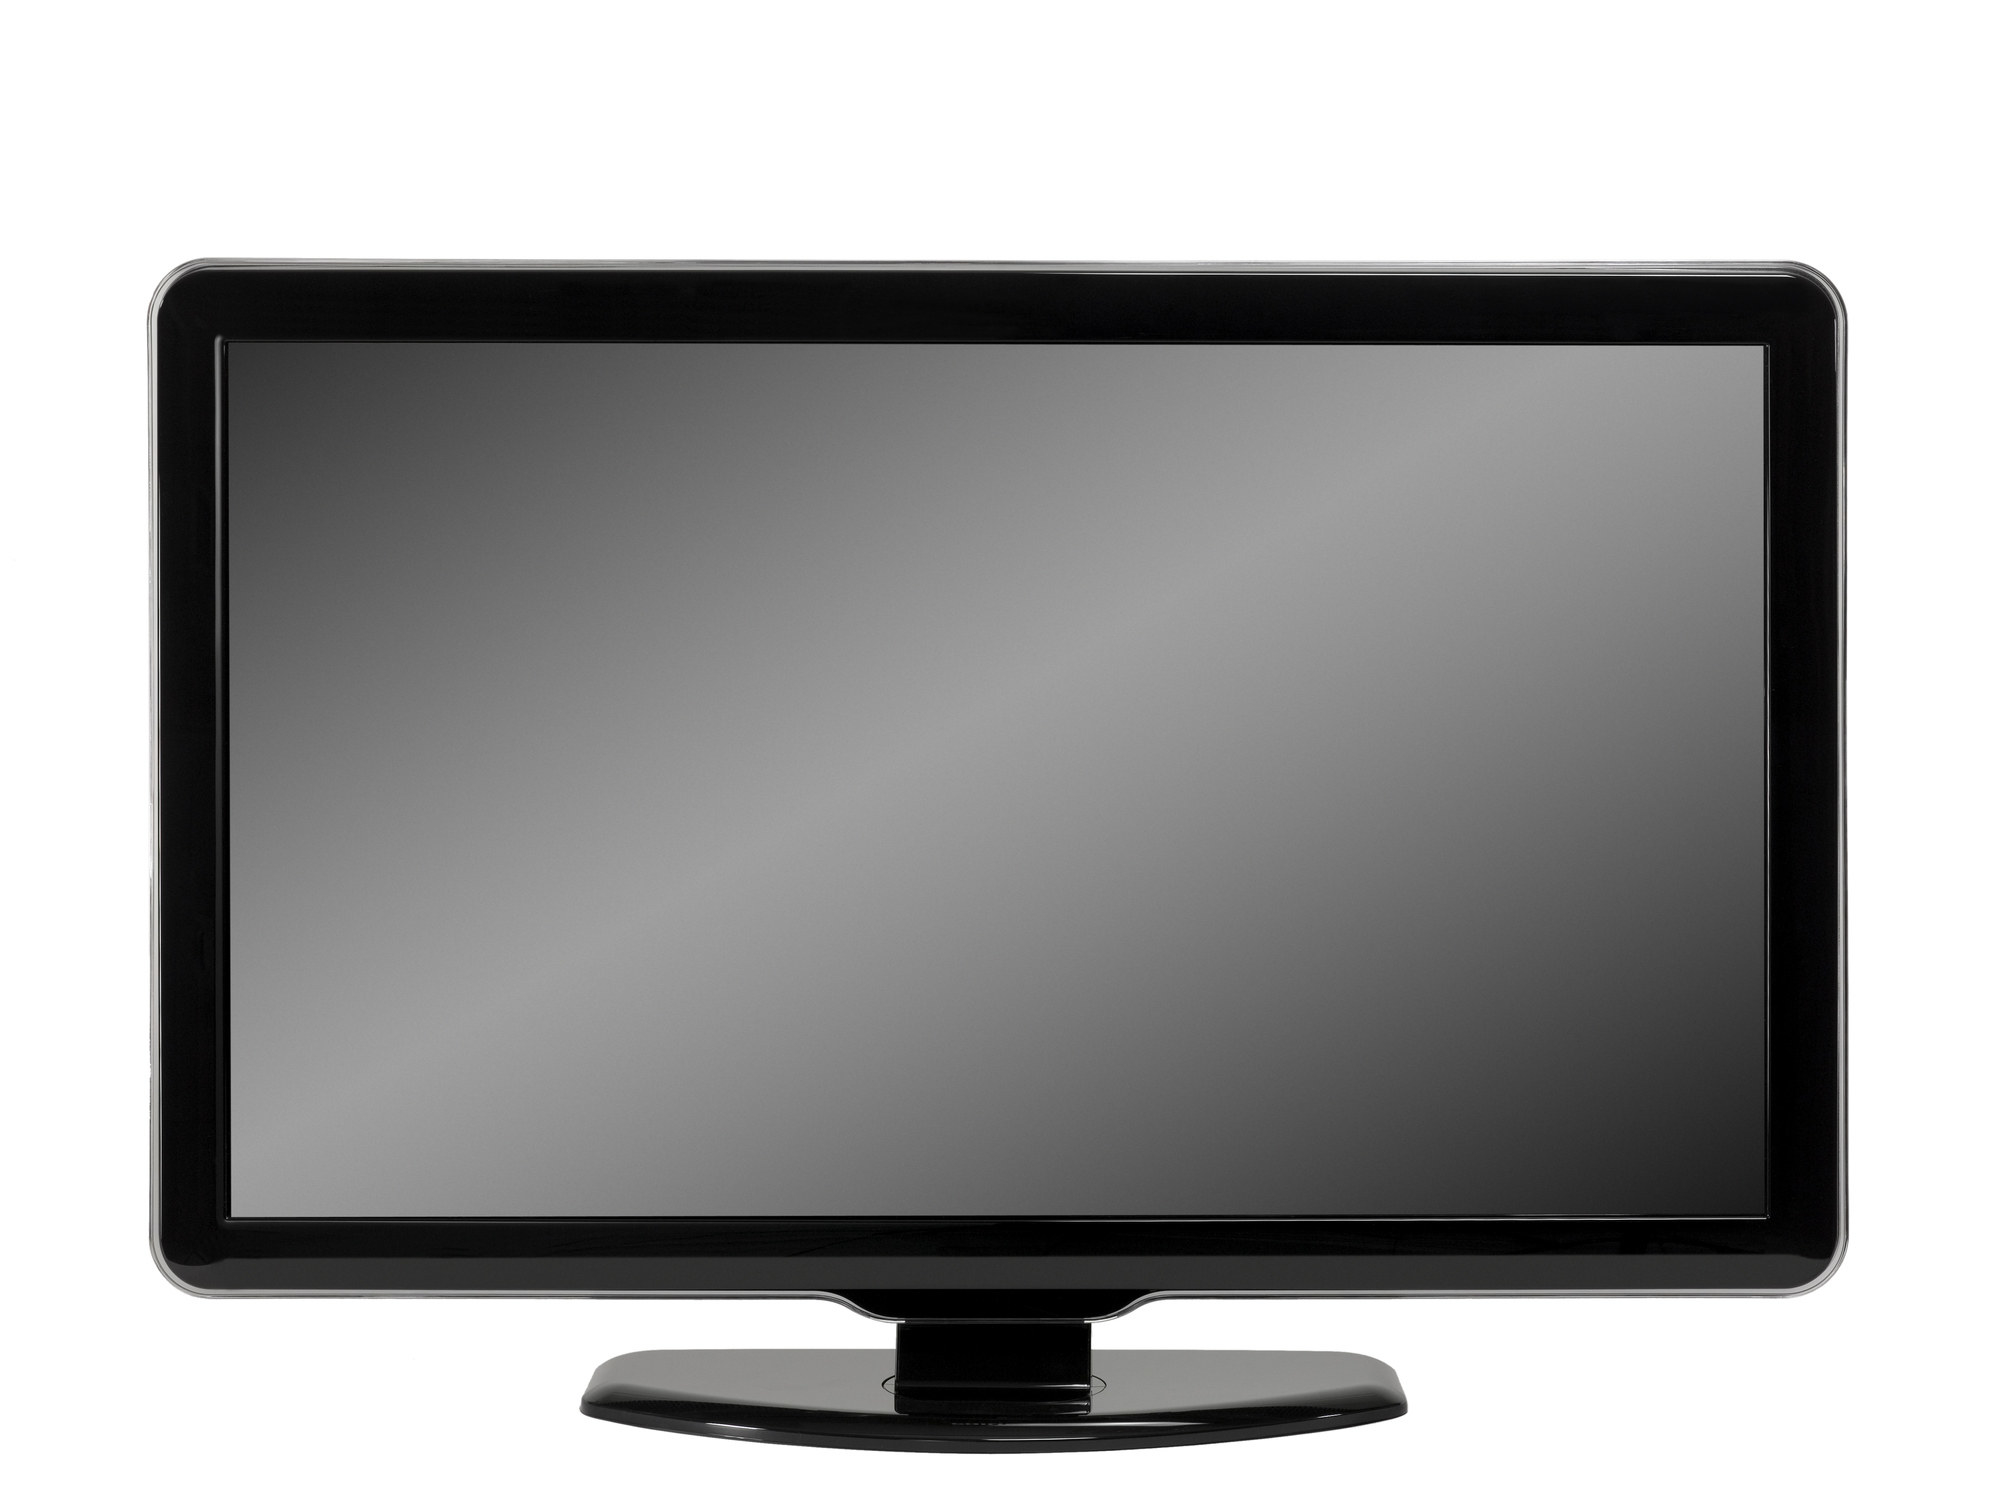 Stock image of a black flat LCD TV set.